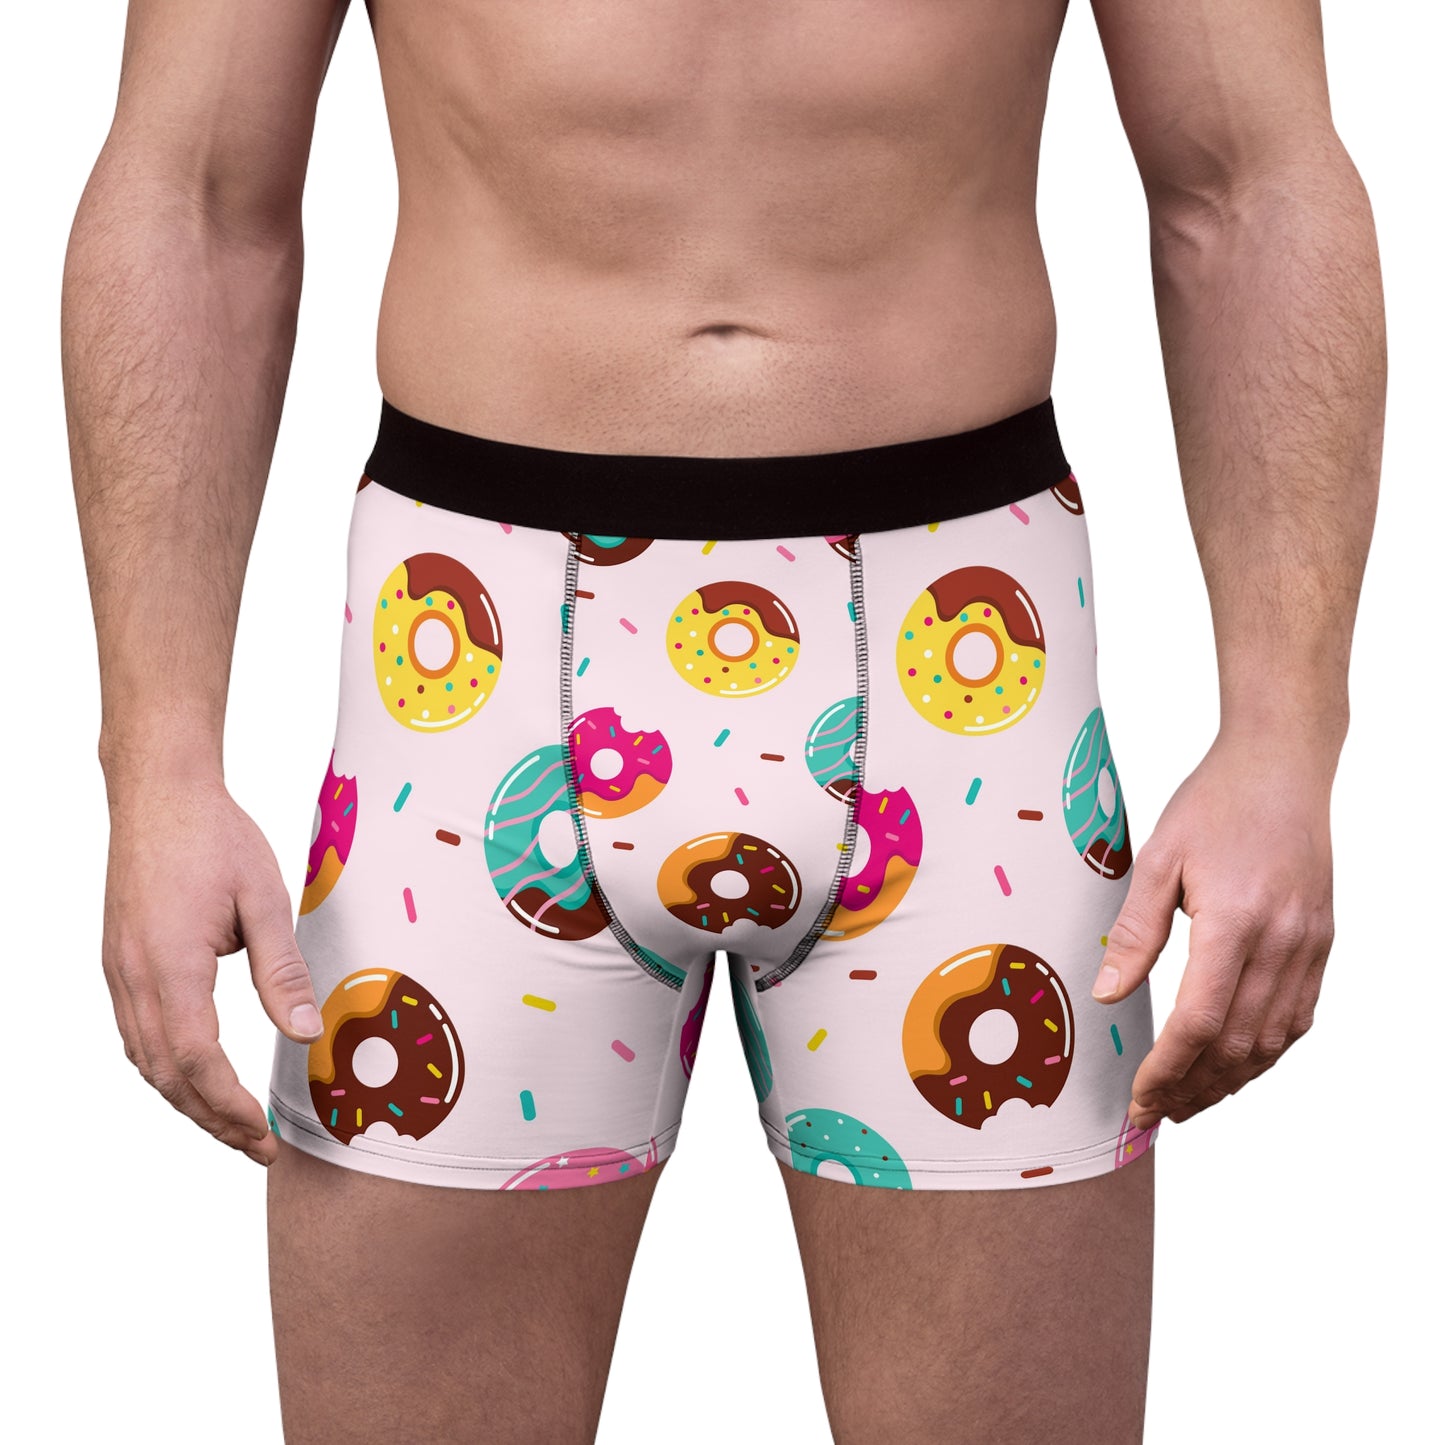 Men's Boxer Briefs donuts